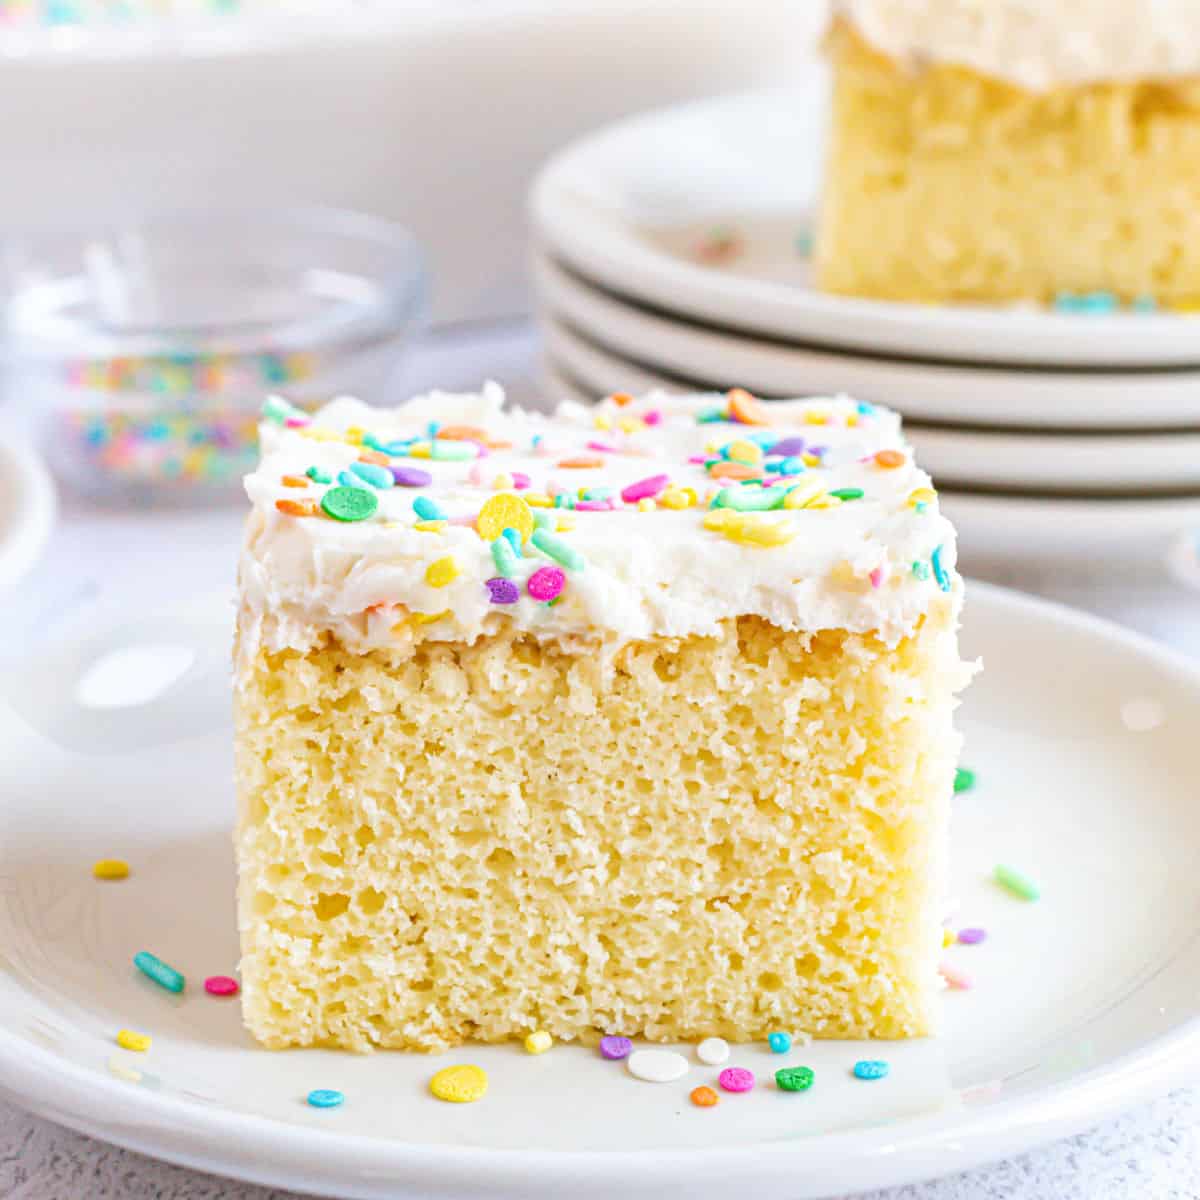 https://www.shugarysweets.com/wp-content/uploads/2021/03/vanilla-sheet-cake-recipe.jpg